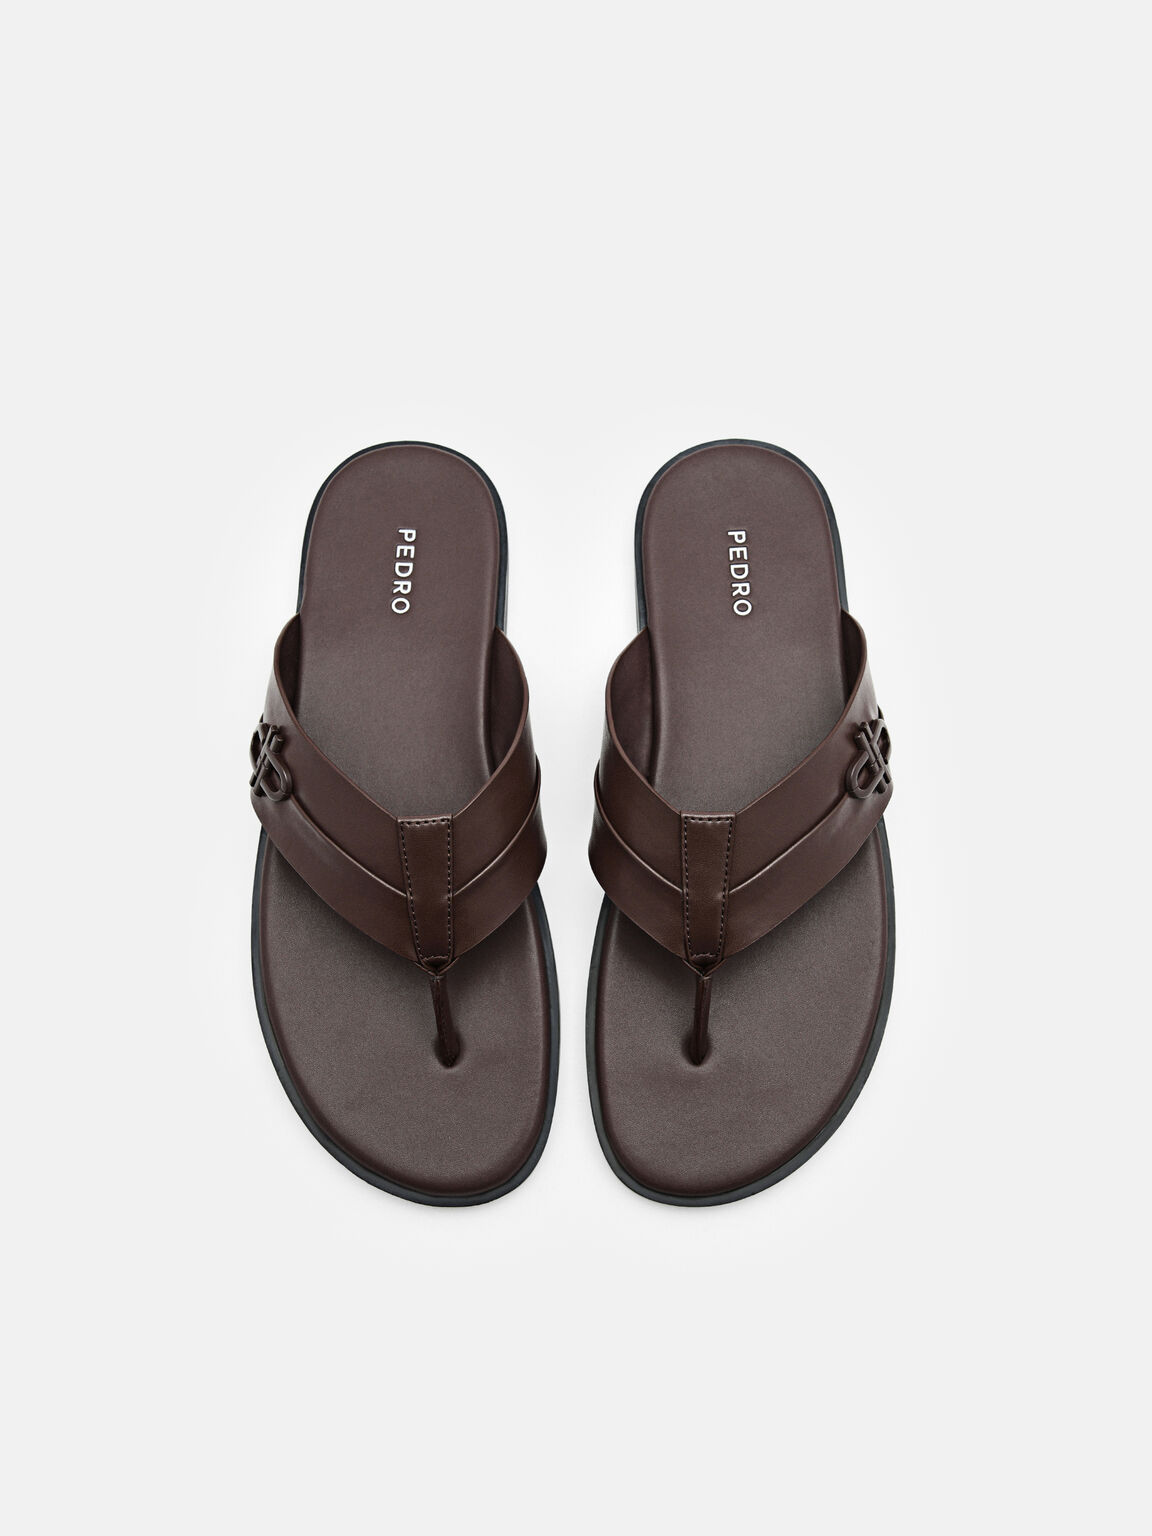 PEDRO Icon Thong Sandals, Dark Brown, hi-res